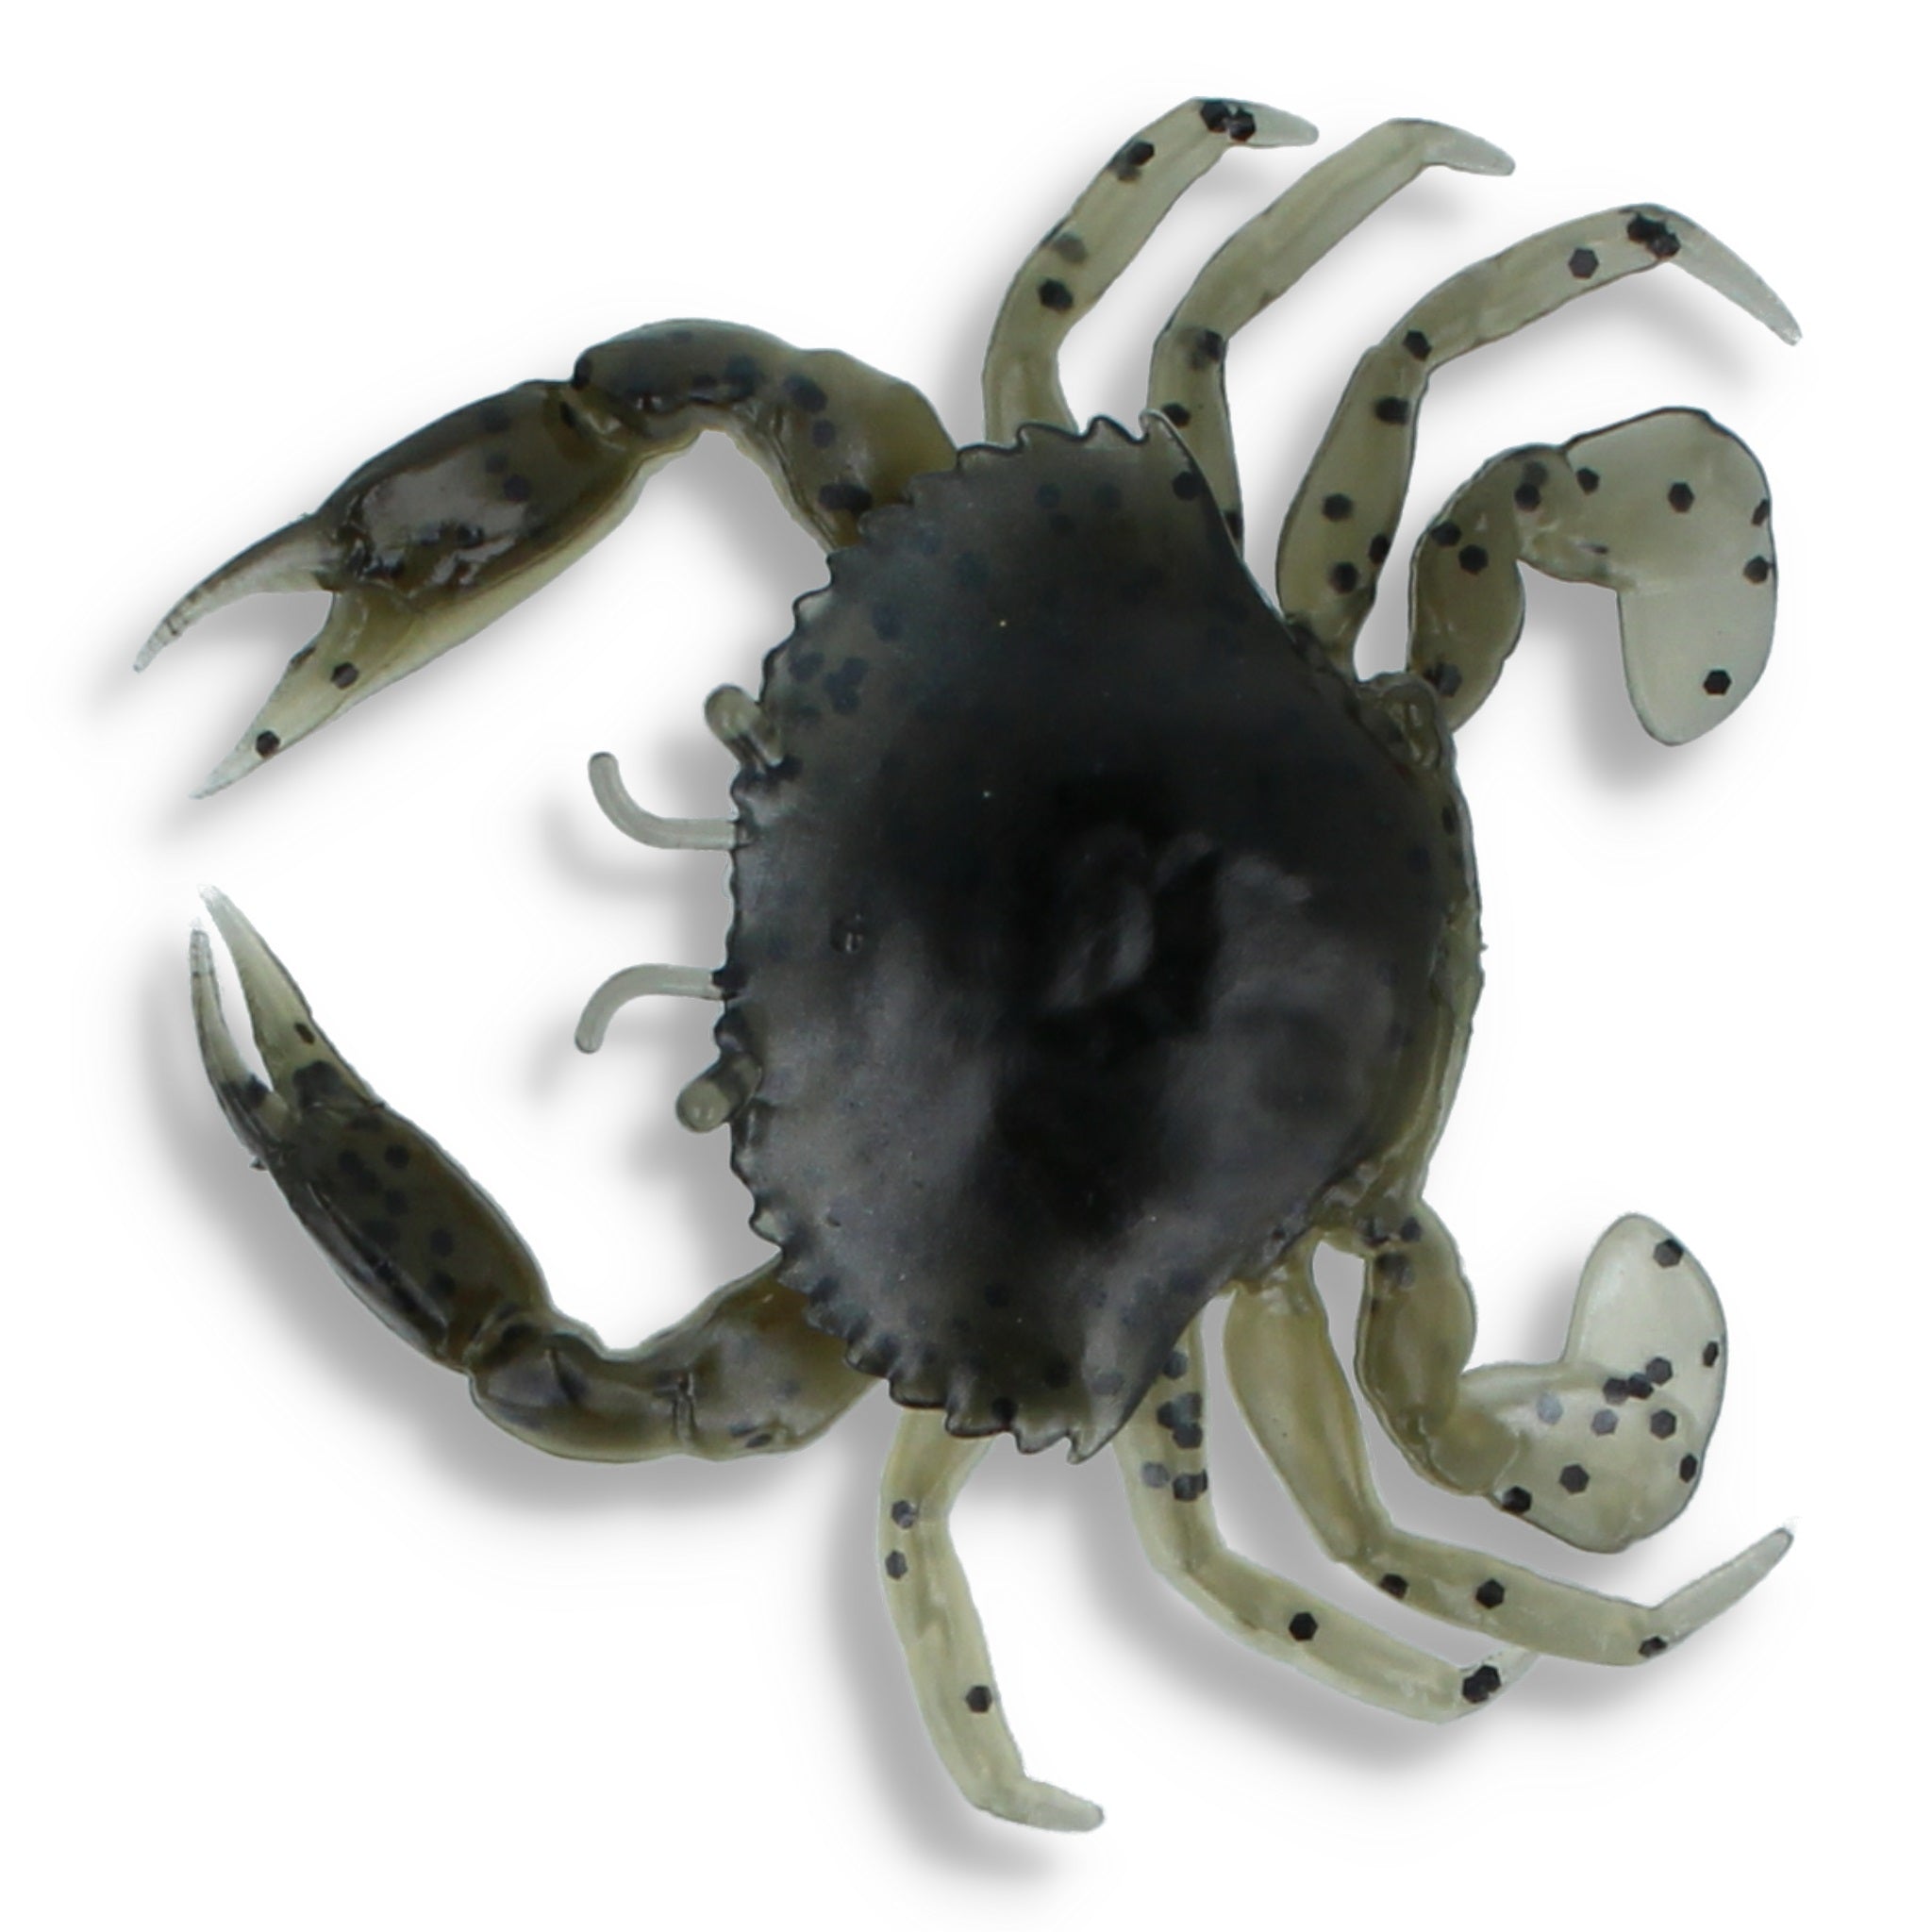 Savage Gear Manic Crab 2"